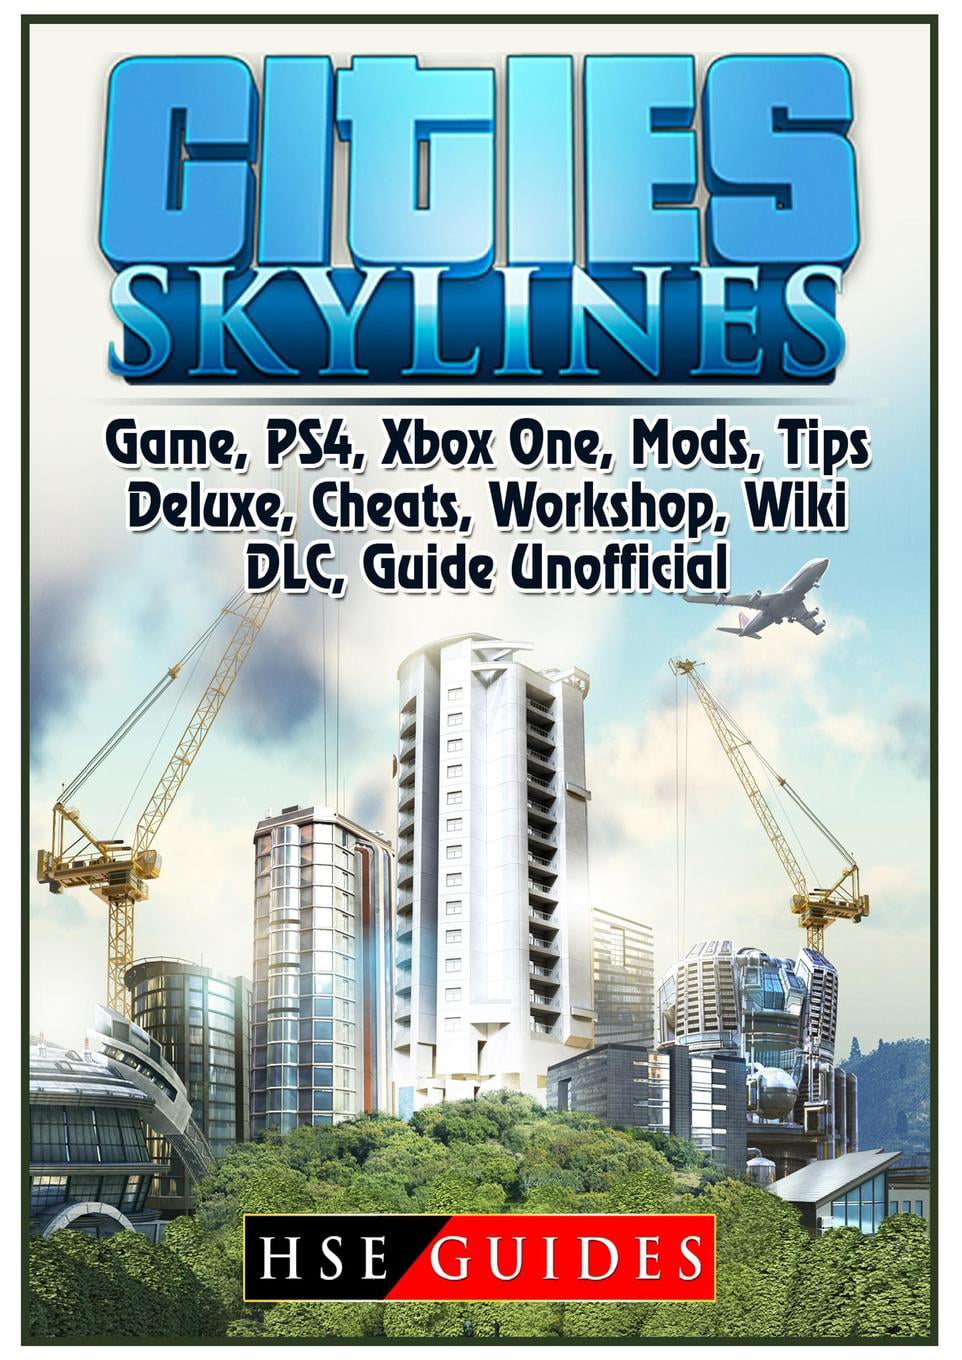 cities skylines deluxe edition mods